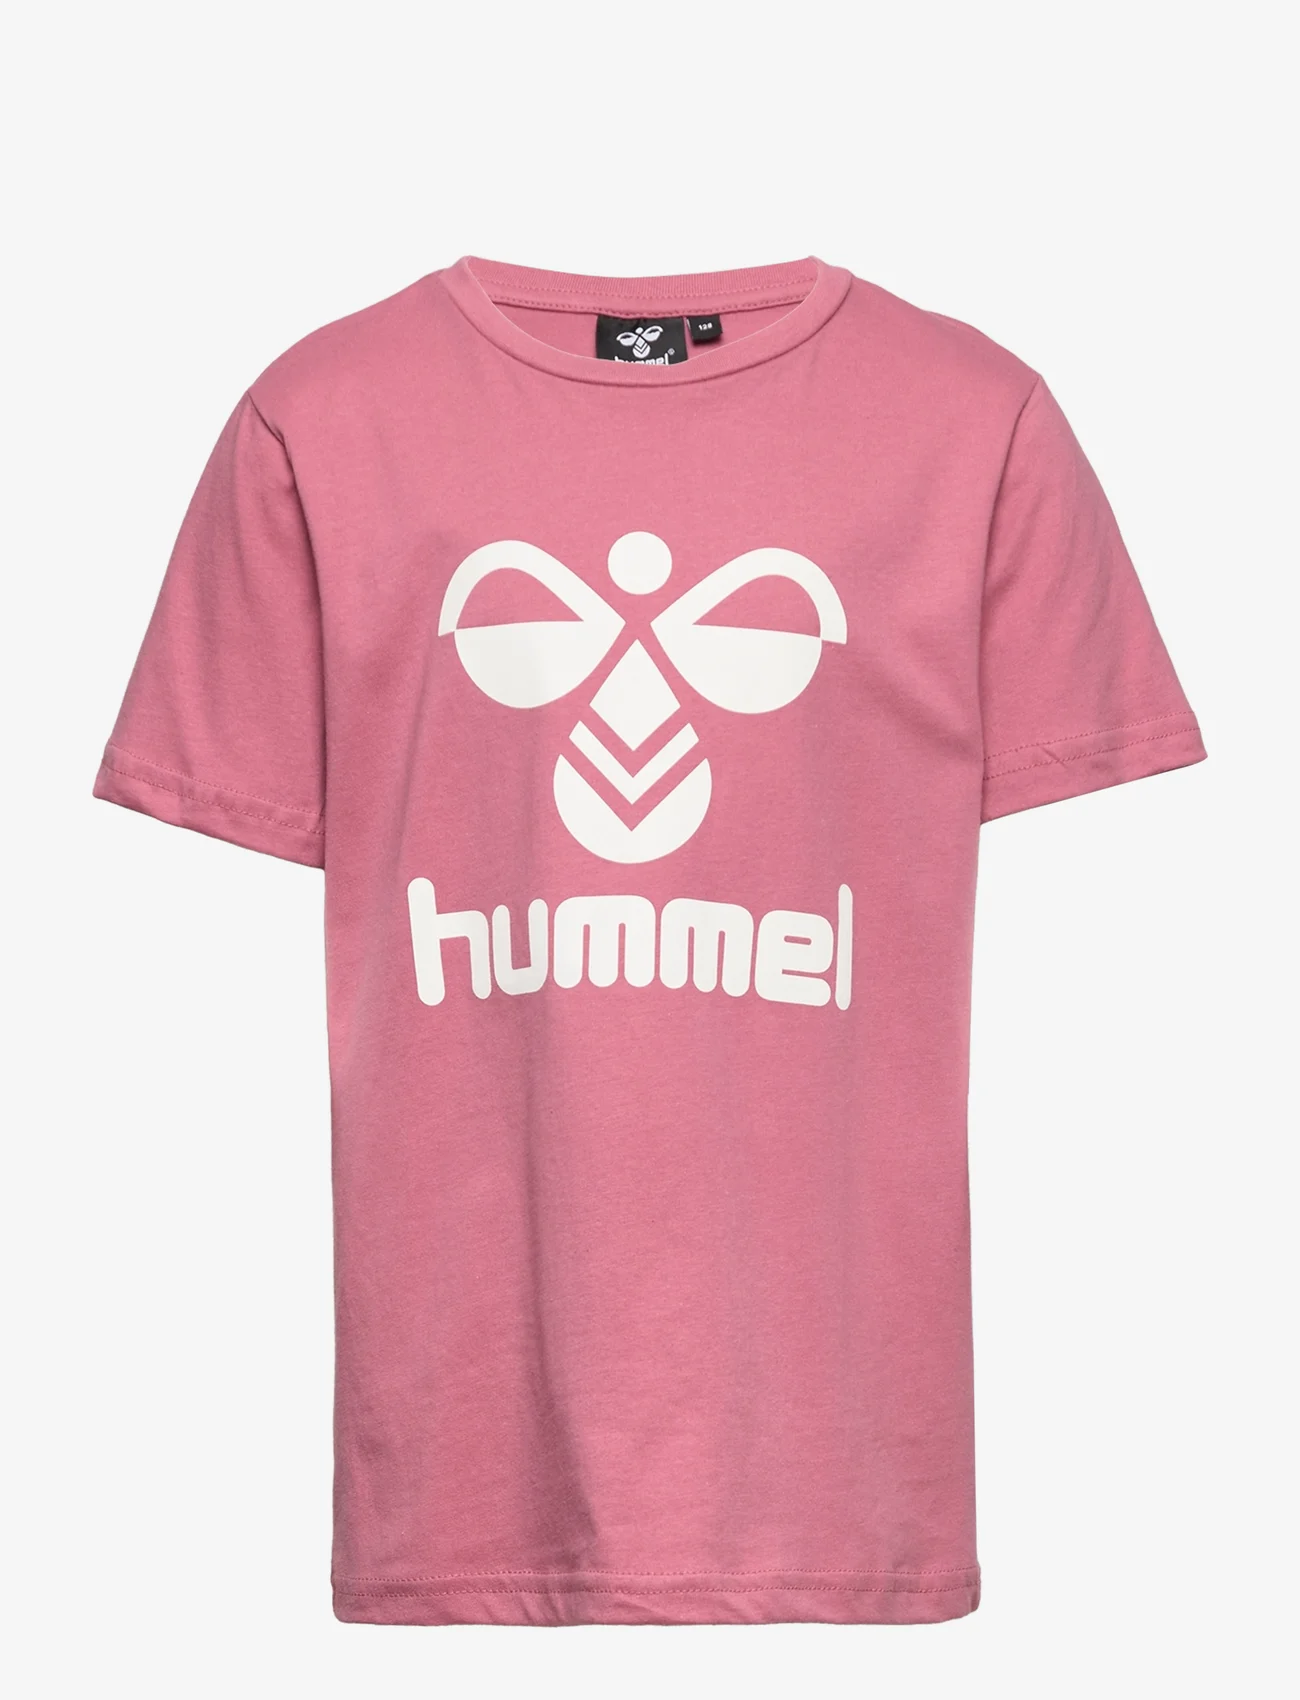 Hummel - hmlTRES T-SHIRT S/S - lühikeste varrukatega - heather rose - 0